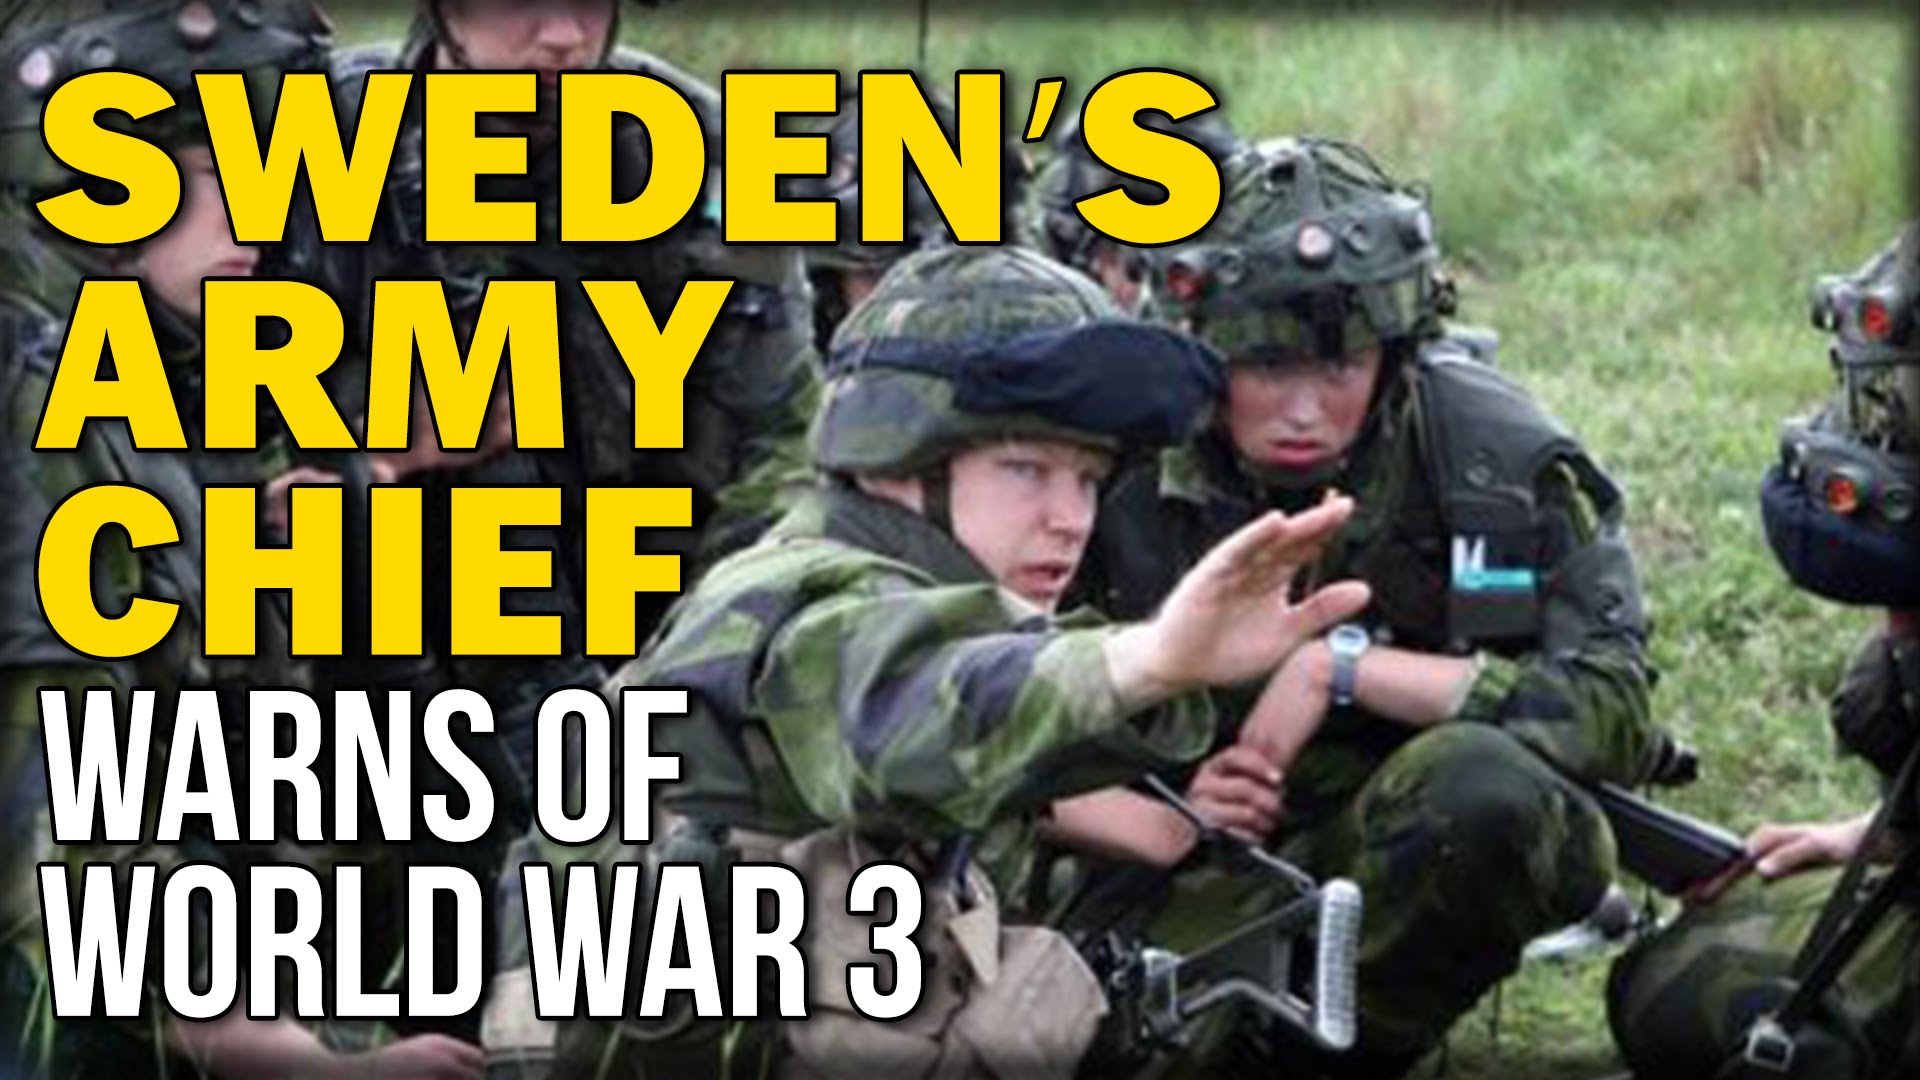 SWEDEN’S ARMY CHIEF WARNS OF WORLD WAR 3